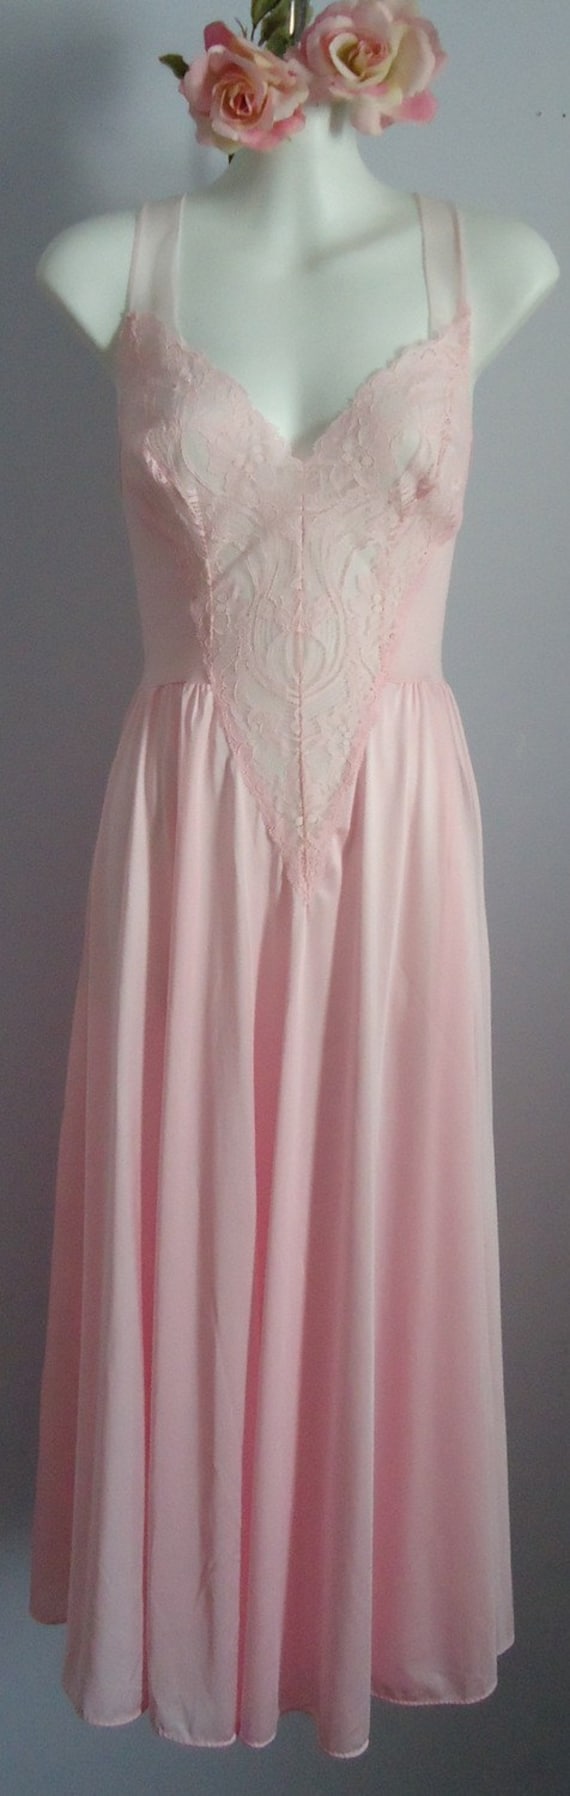 Vintage Olga Nightgown in Petal Pink by MadMakCloset on Etsy